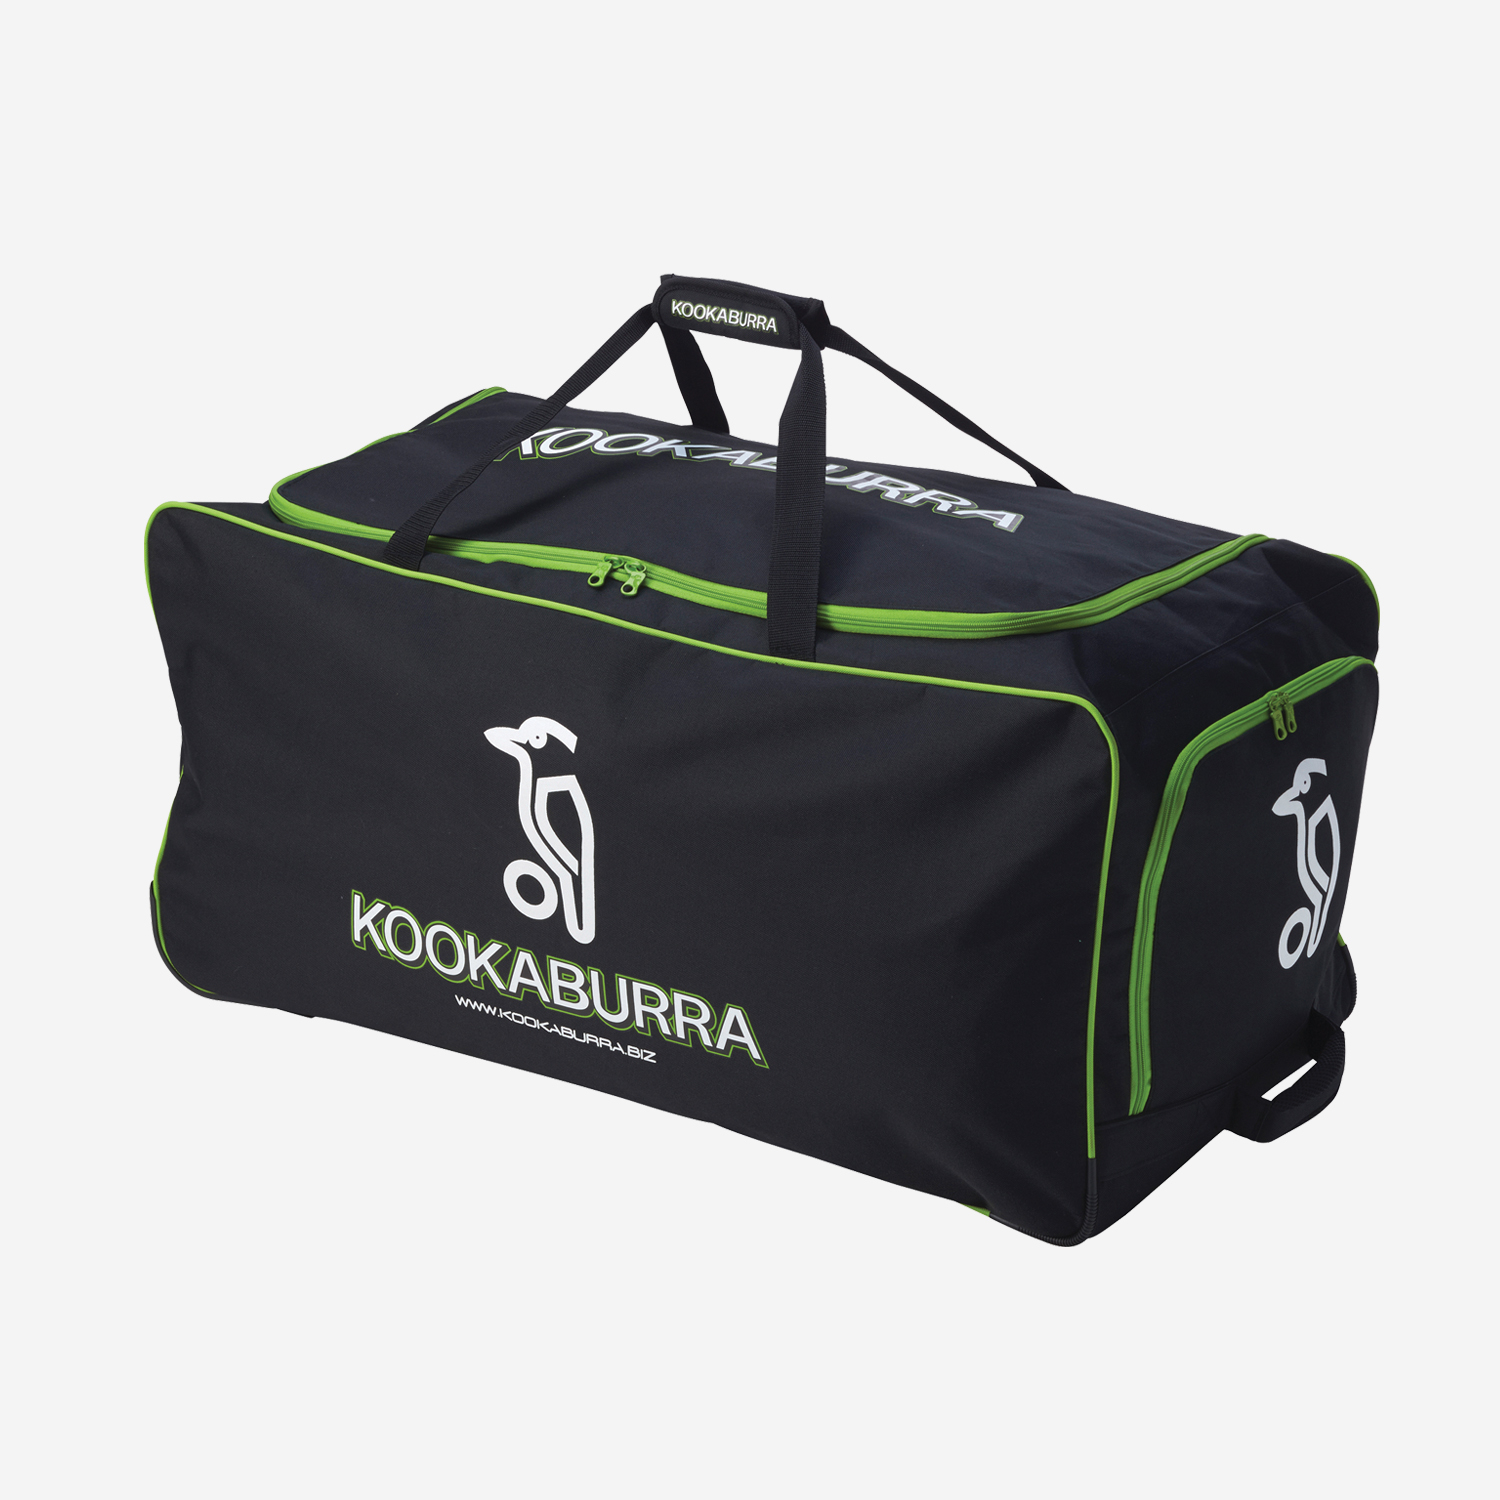 Kookaburra Team Kit Bag With Wheels 3S18705